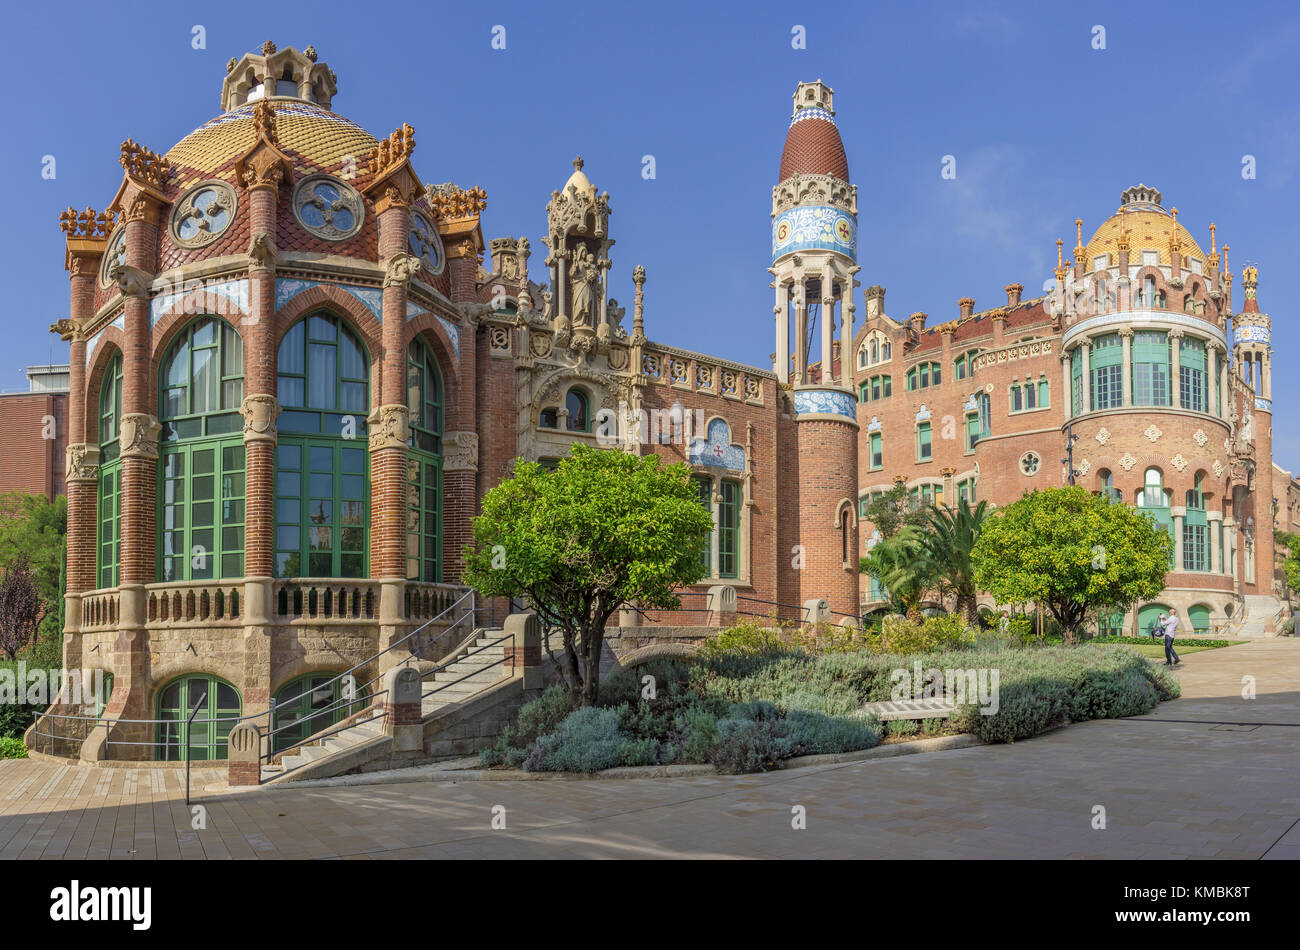 Hospital de la Santa Creu i Sant Pau von dem Architekten Lluís Domènech i Montaner, Barcelona, Katalonien, Spanien Stockfoto